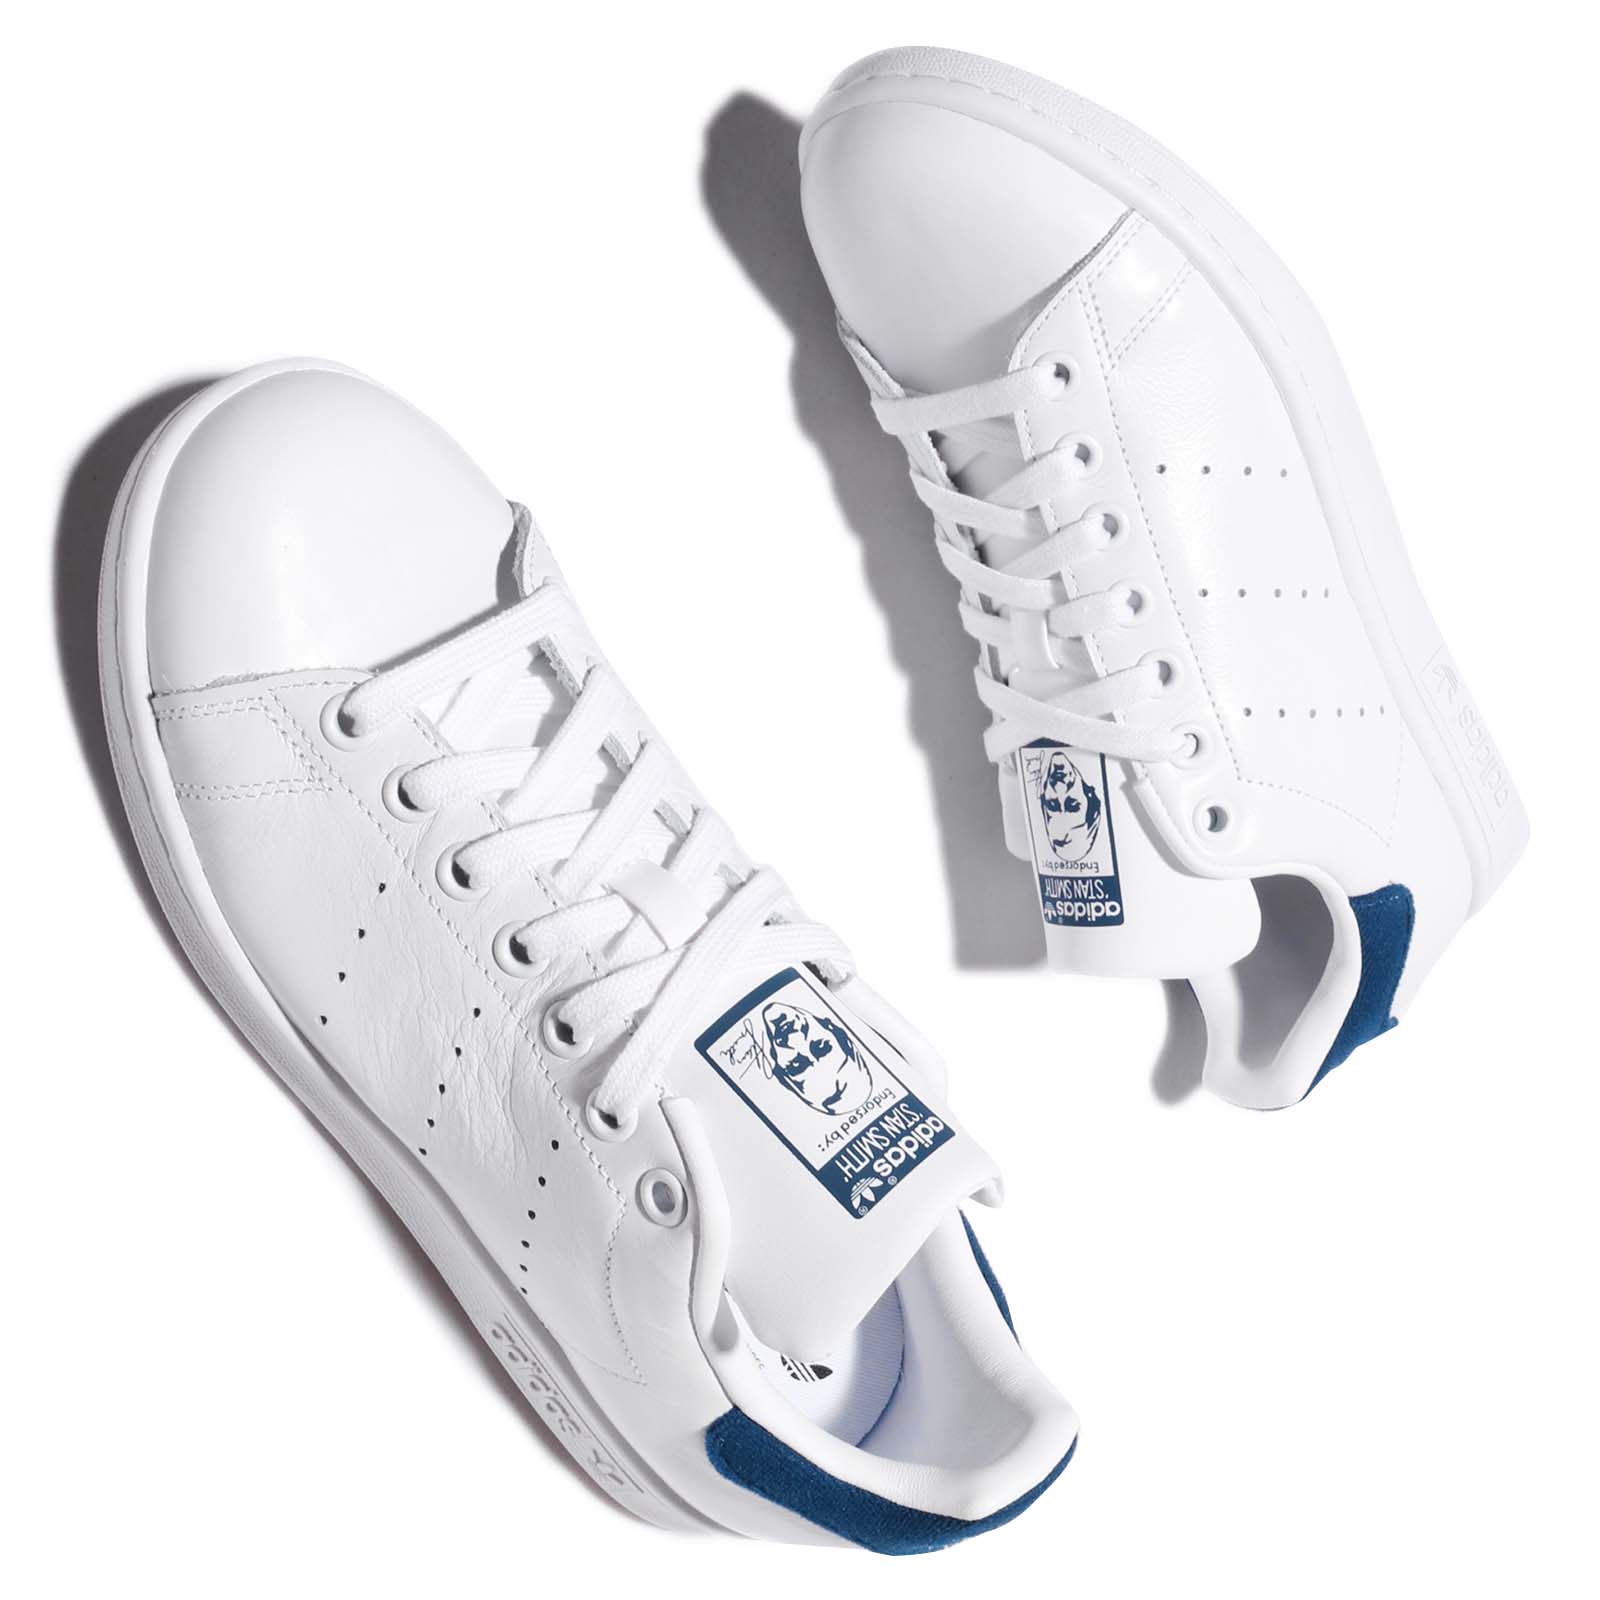 Giày thể thao Adidas Originals Stan Smith BZ0483 xanh dương - 1906925 - 2037706